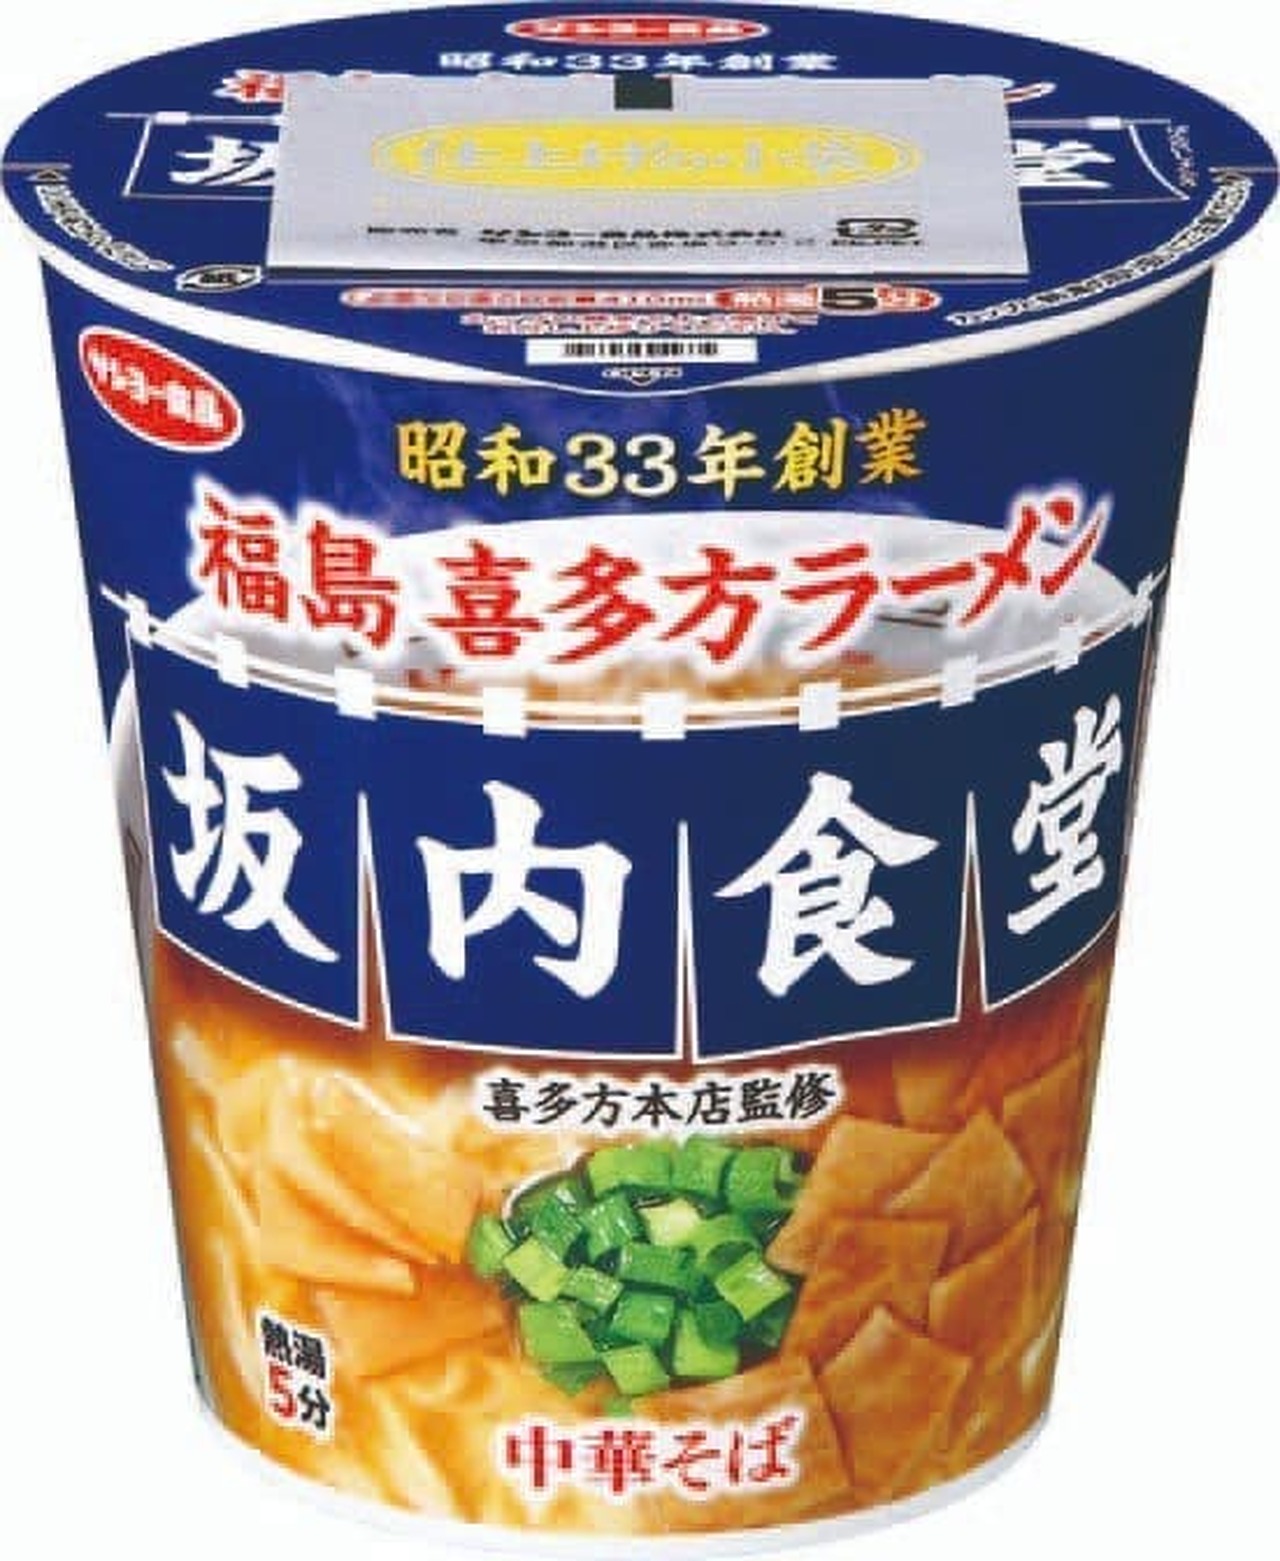 Lawson "Sanyo Foods Bannai Shokudo Kitakata Main Store Supervised Chinese Soba"